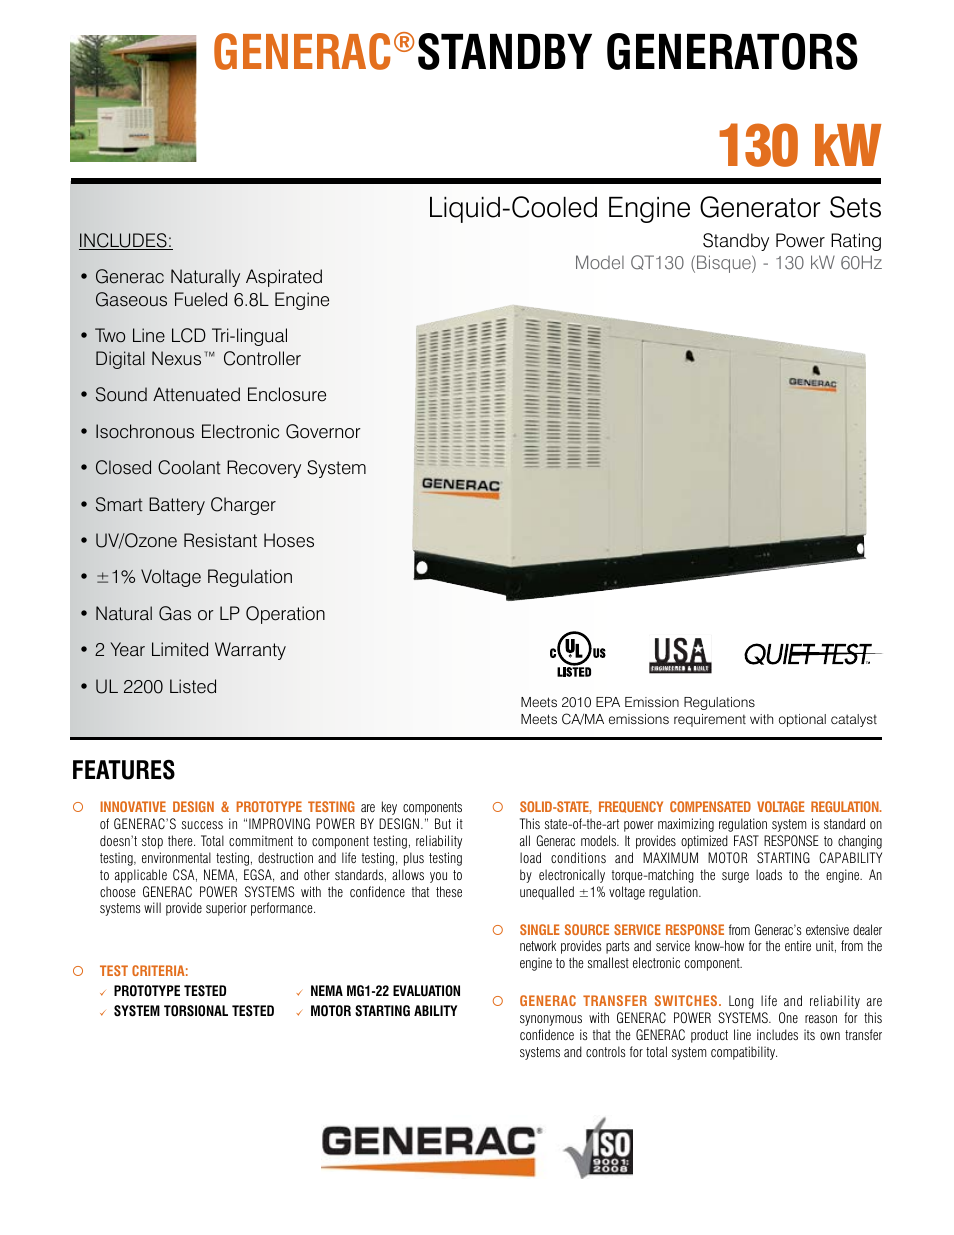 Liquid-Cooled Engine Generator Sets Model QT130 (Bisque)